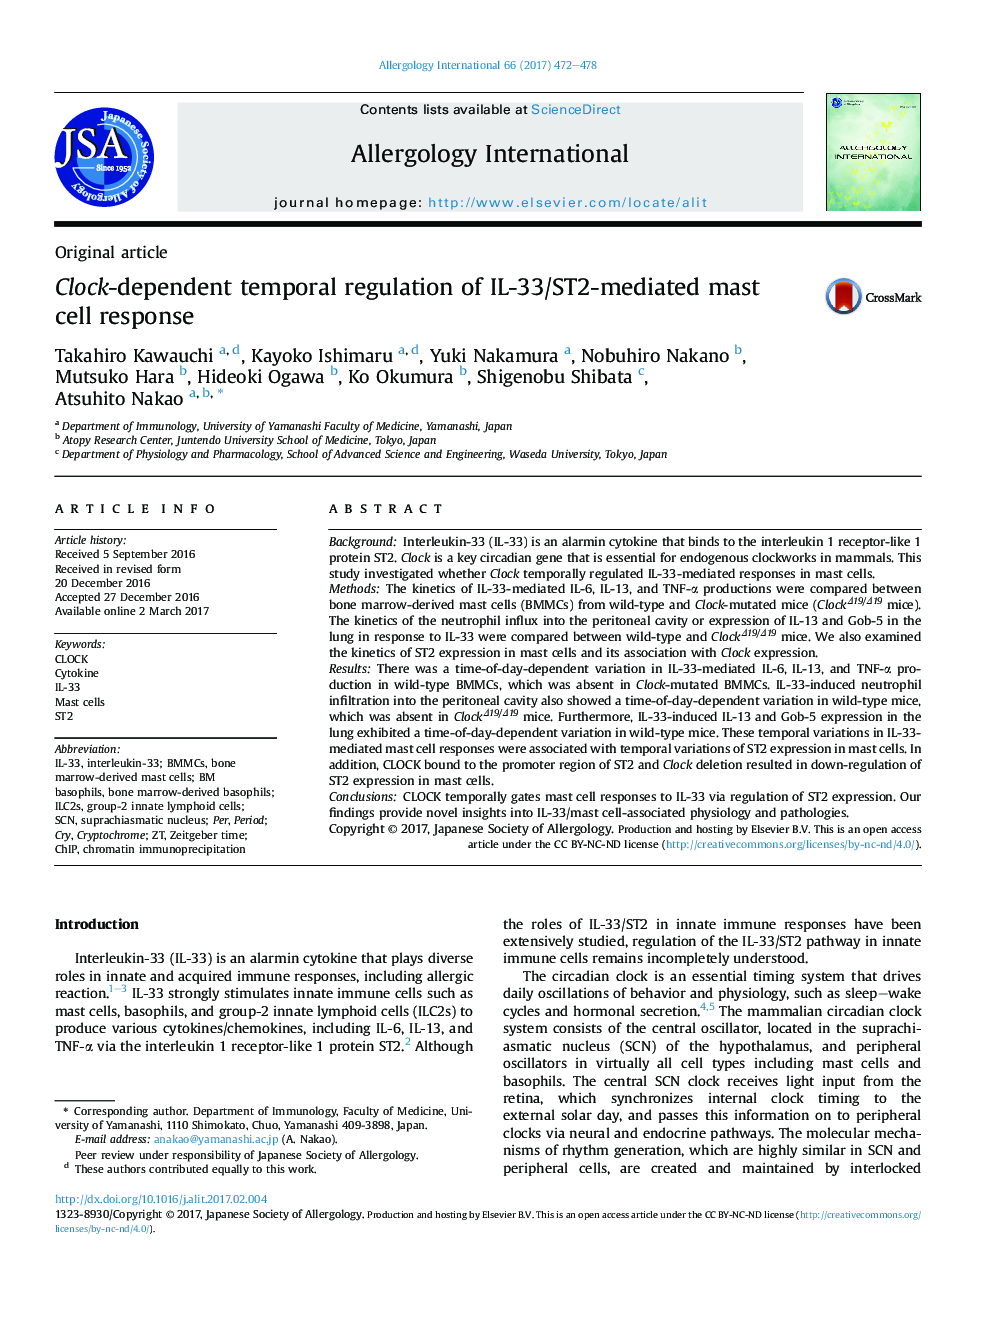 Clock-dependent temporal regulation of IL-33/ST2-mediated mast cellÂ response